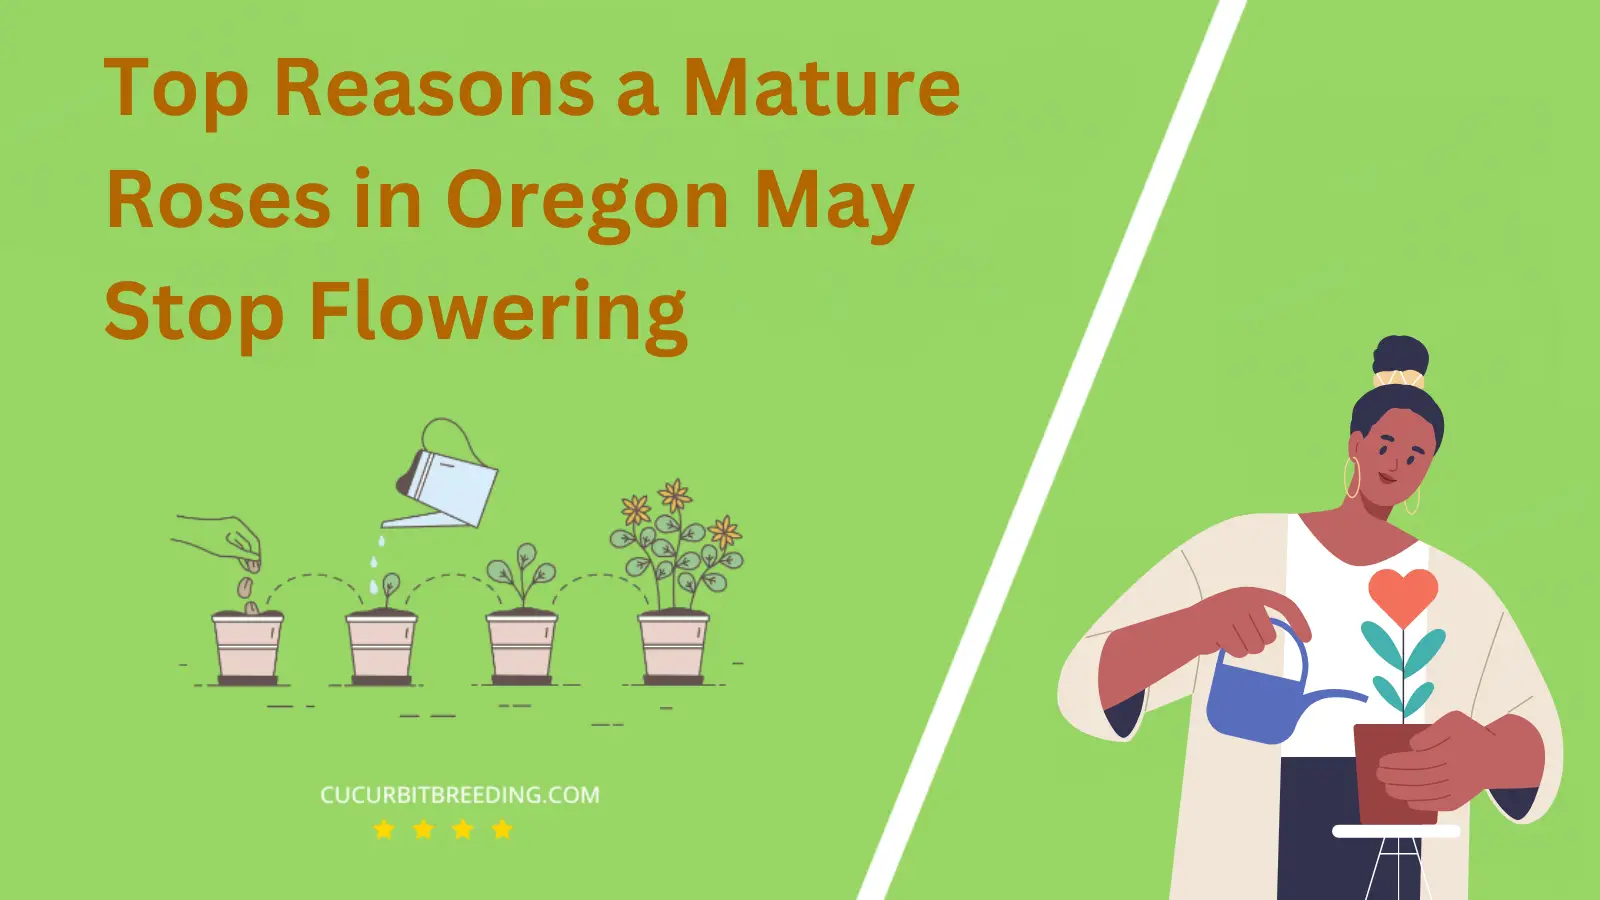 Top Reasons a Mature Roses in Oregon May Stop Flowering